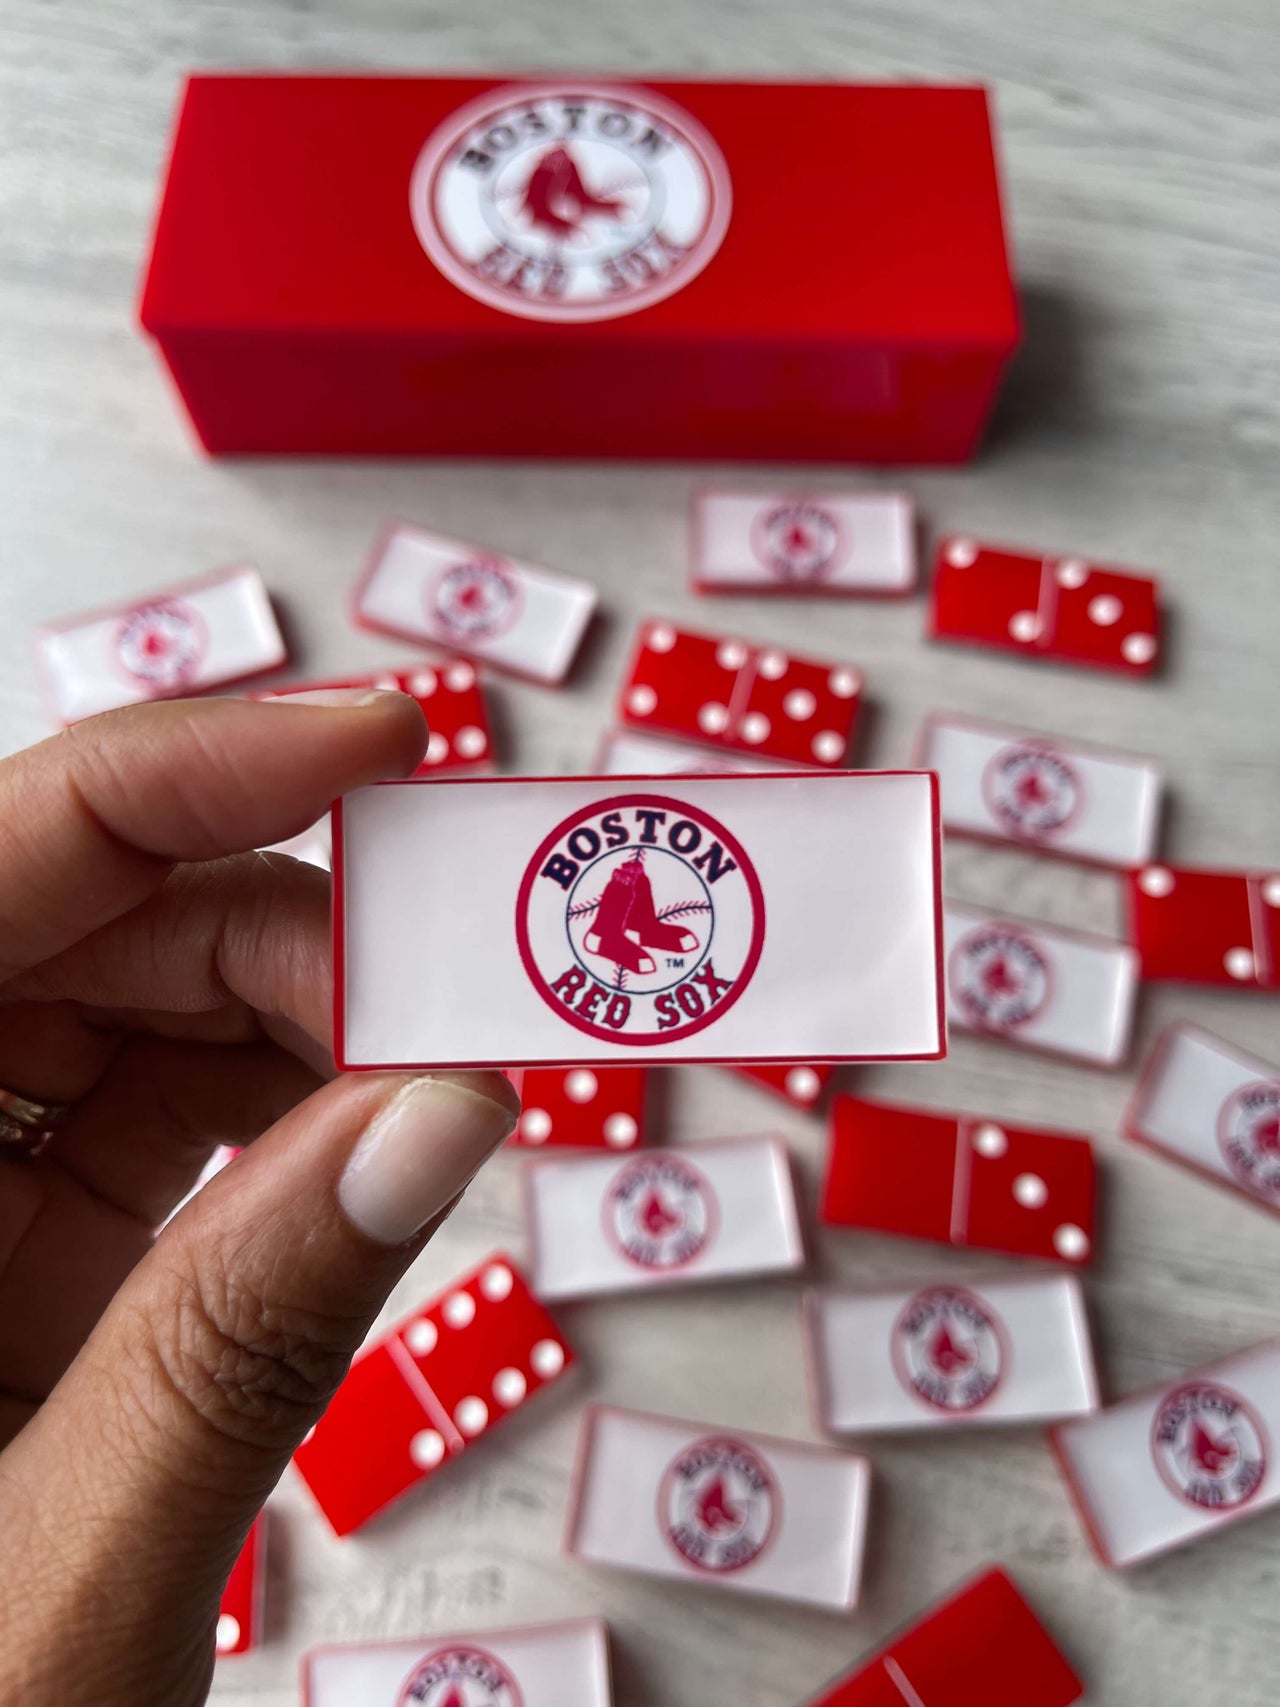 Boston Red Sox Custom Dominoes Set MLB Baseball Dominoes